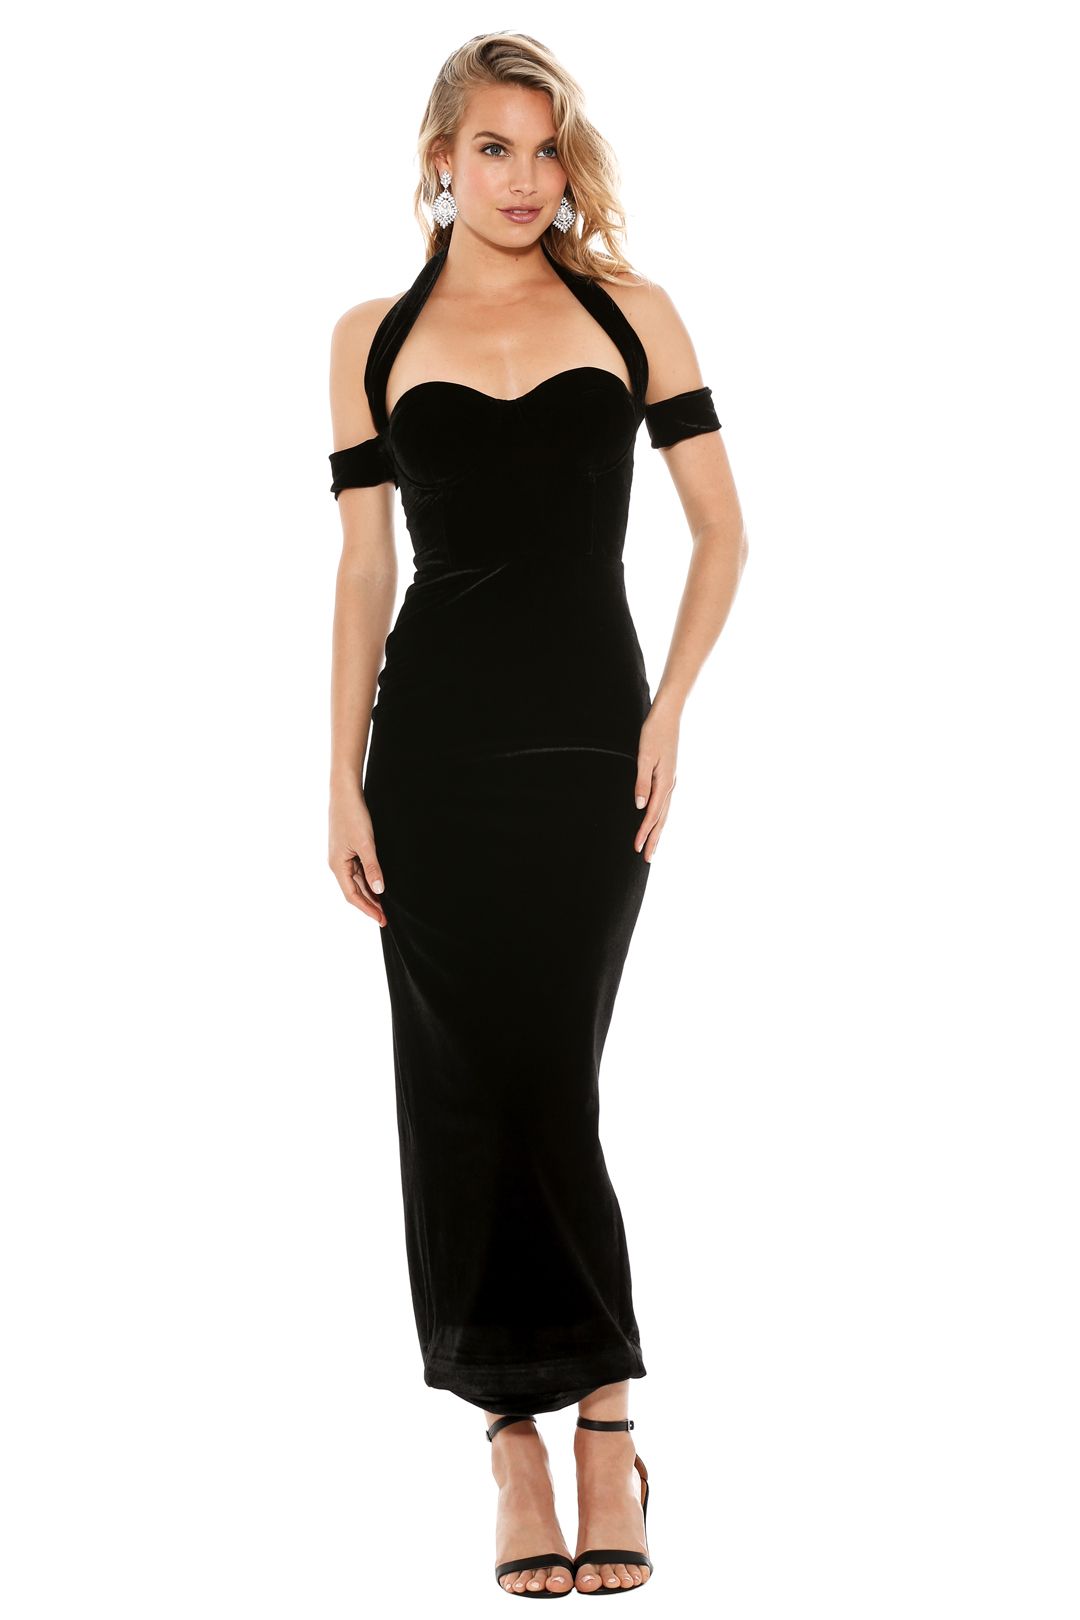 Misha Collection - Angelina Velvet Dress - Front